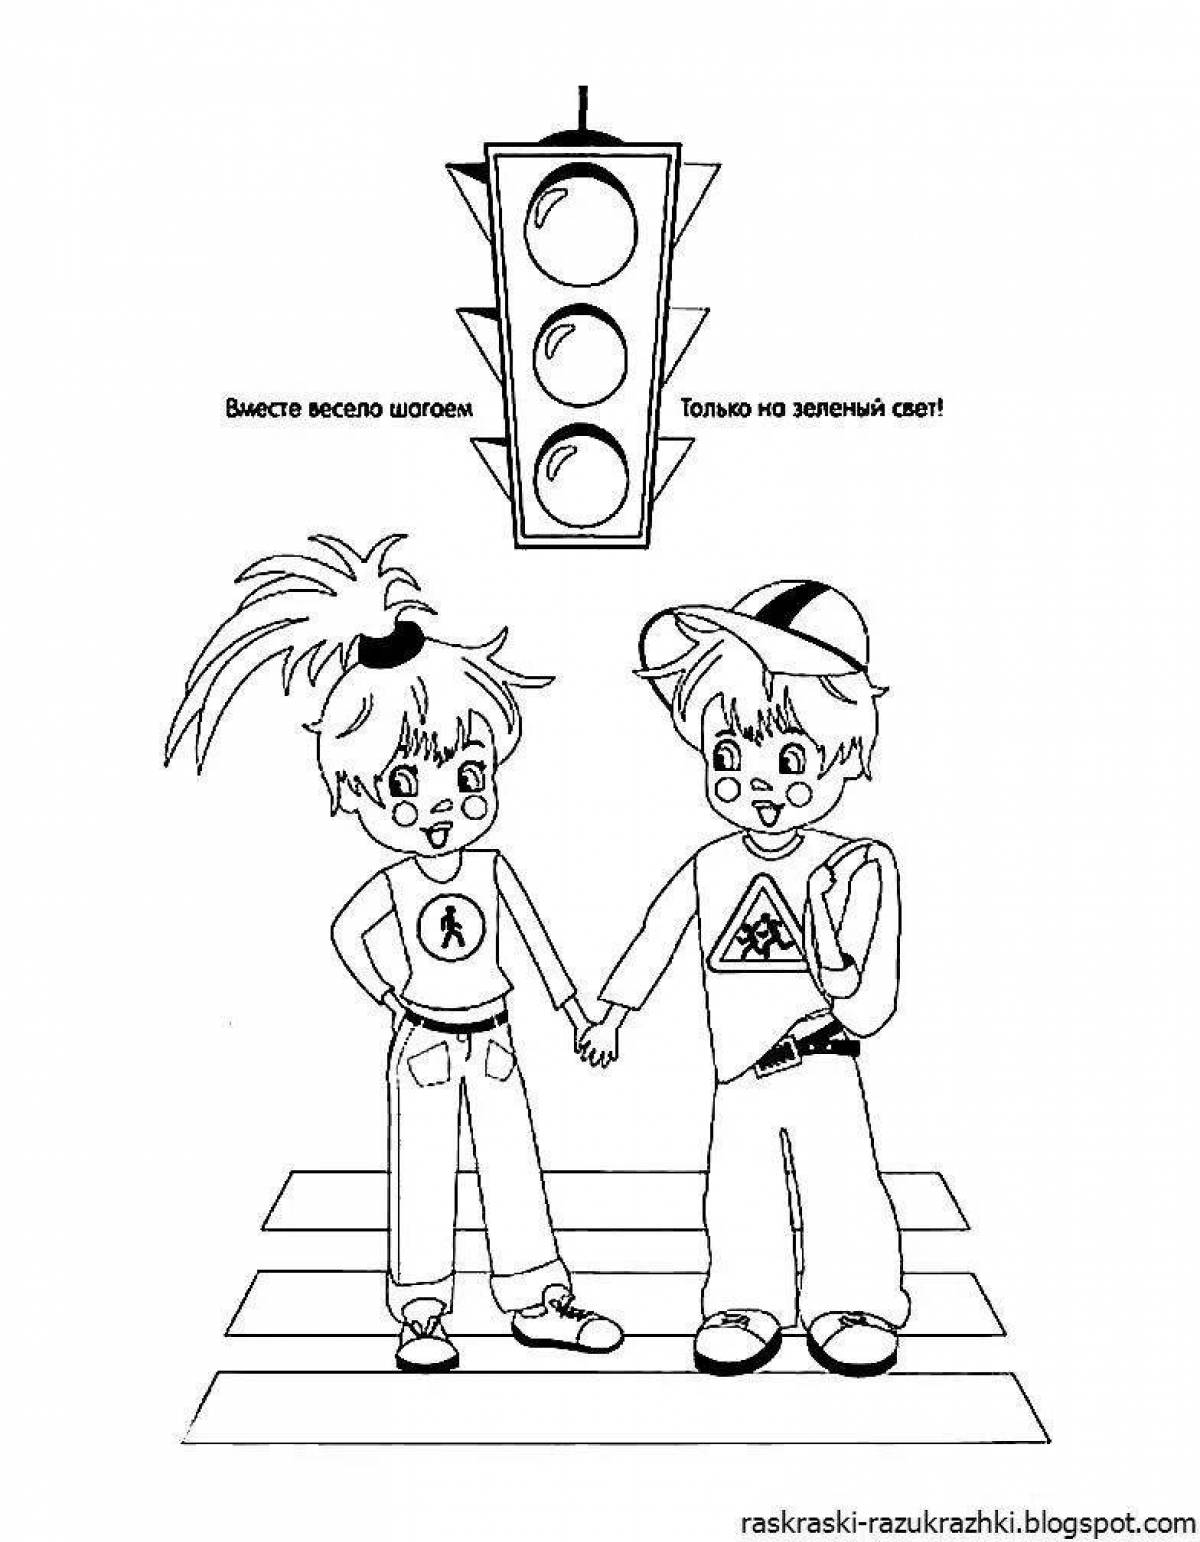 Fun rules of the road pre-k coloring book